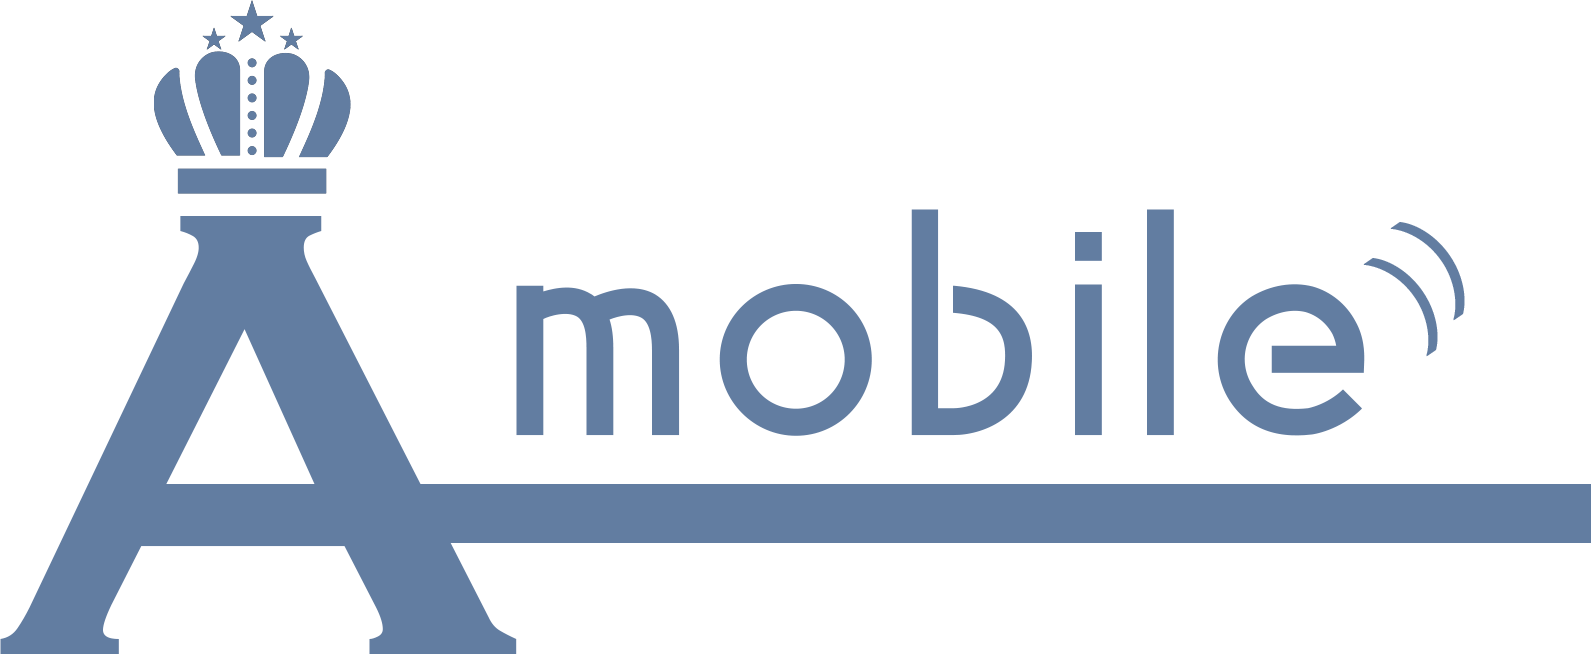 A-mobile 株式会社